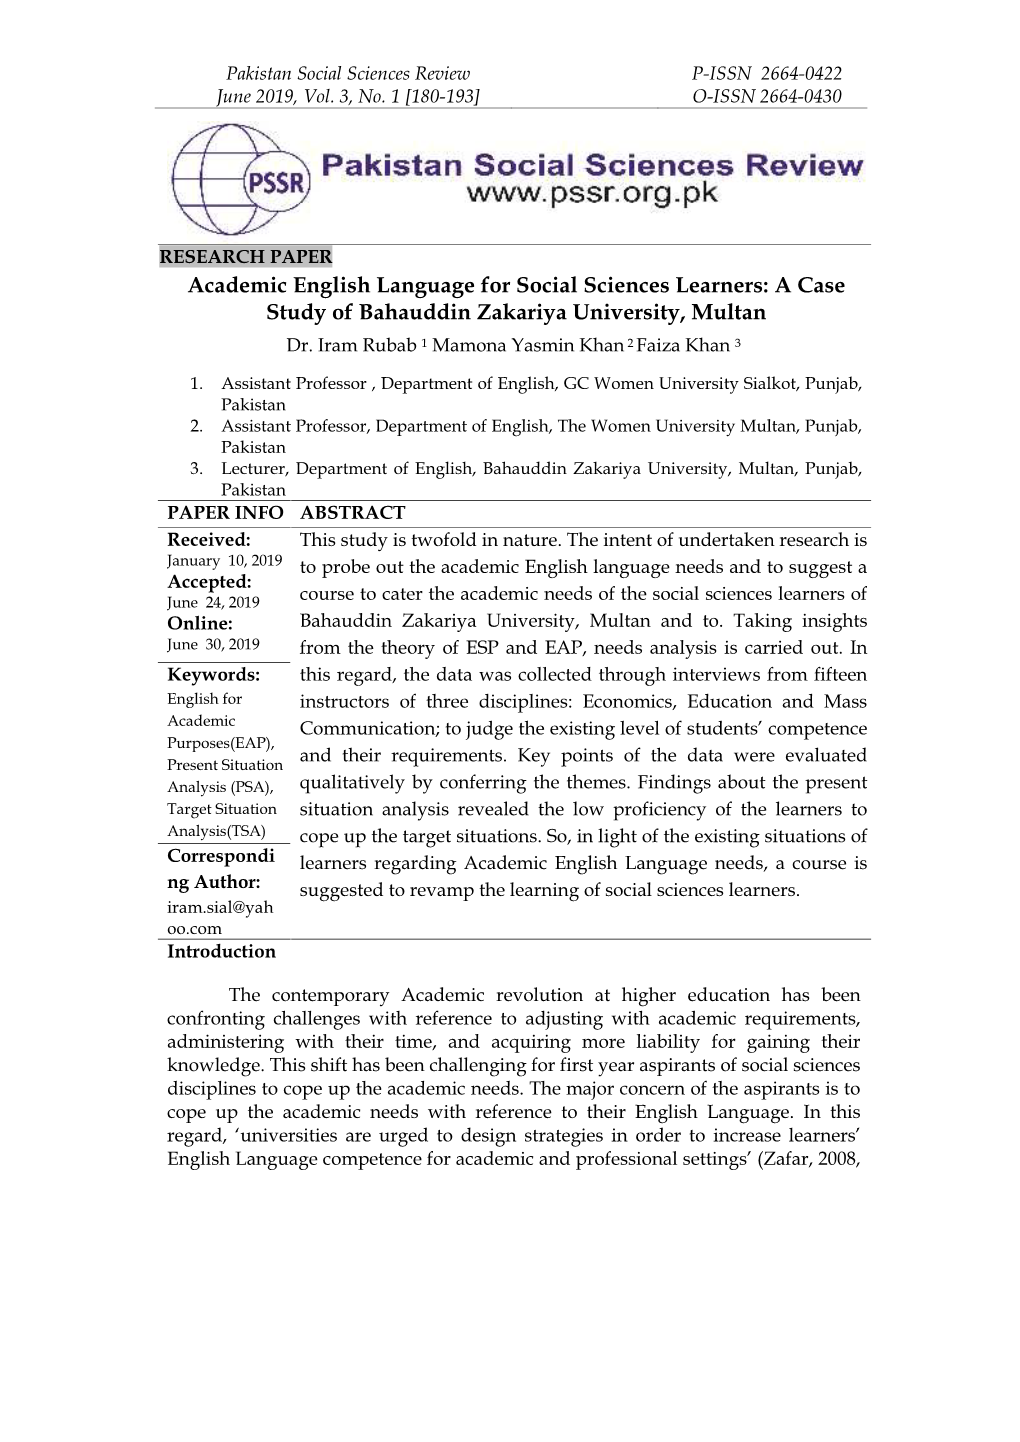 Academic English Language for Social Sciences Learners: a Case Study of Bahauddin Zakariya University, Multan Dr